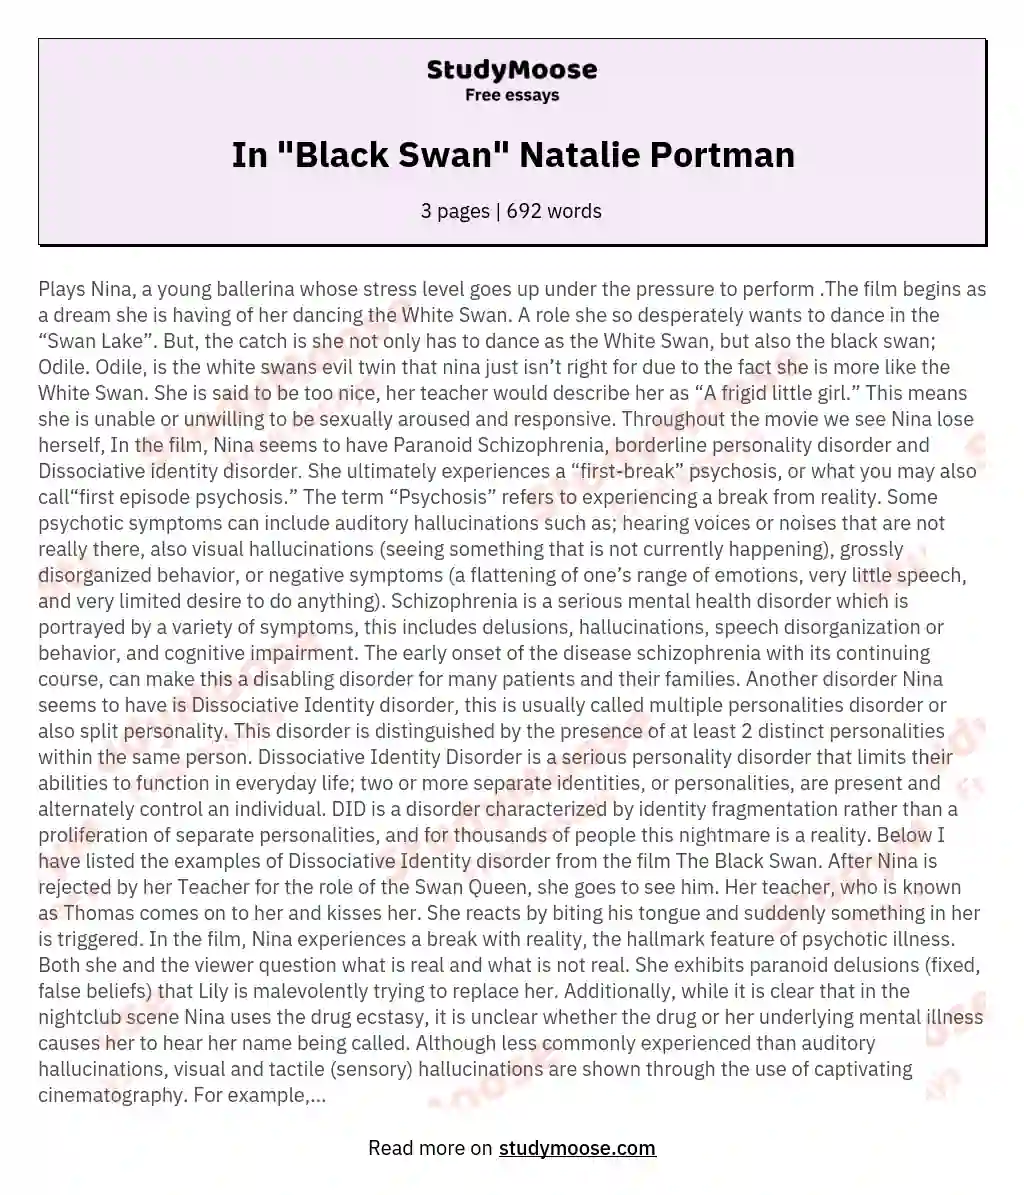 In "Black Swan" Natalie Portman essay